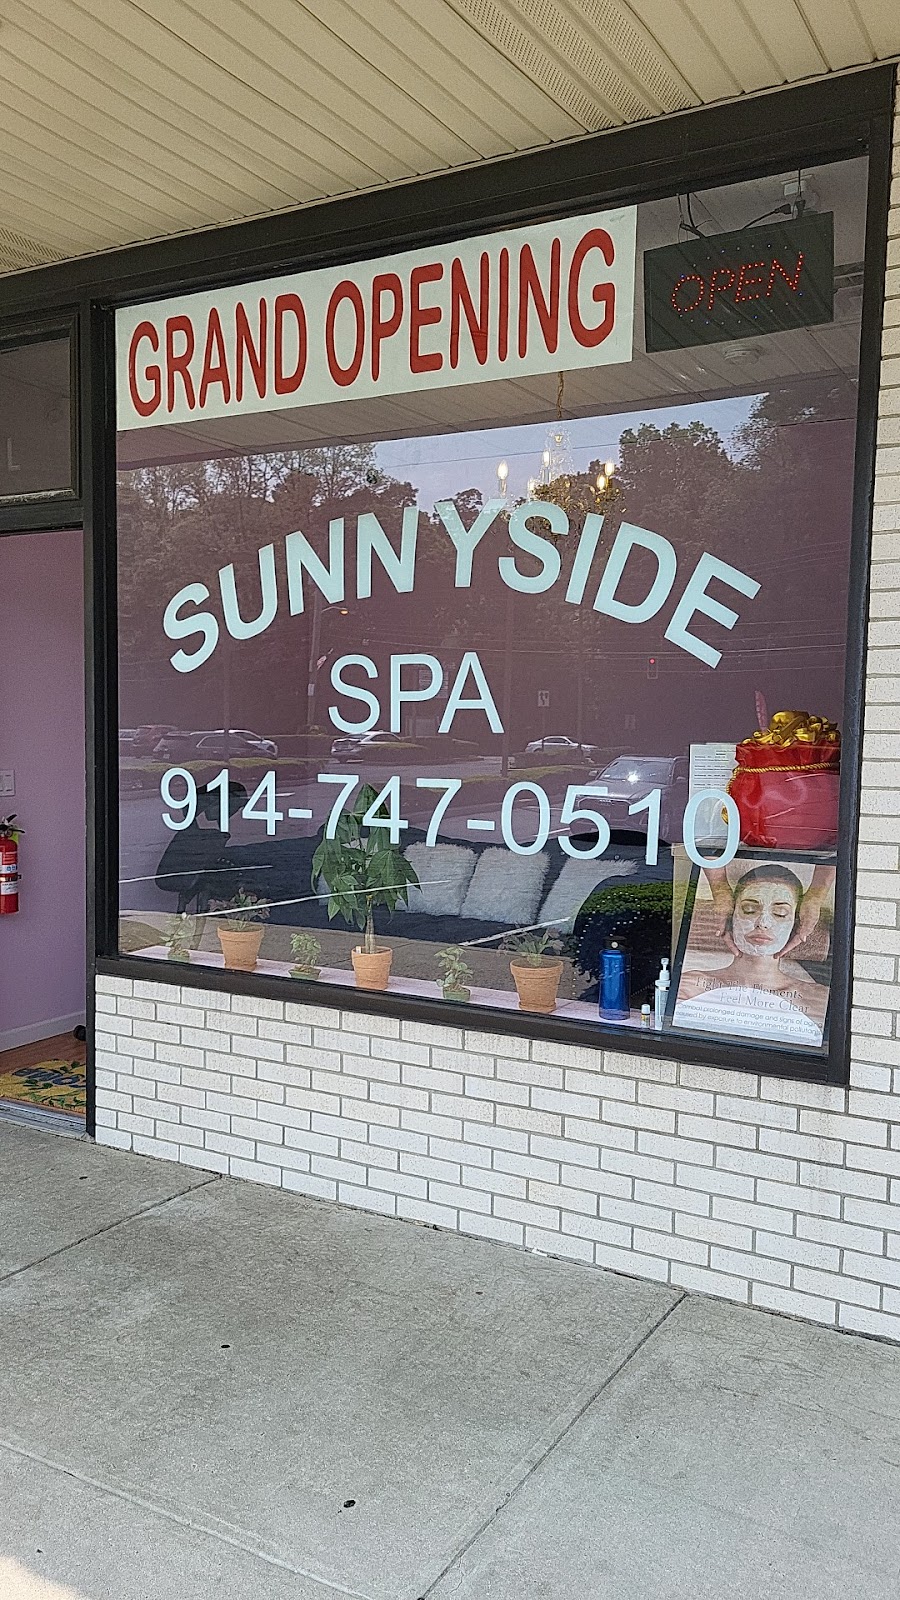 Sunnyside Spa | 911 N Broadway L, White Plains, NY 10603 | Phone: (914) 747-0510